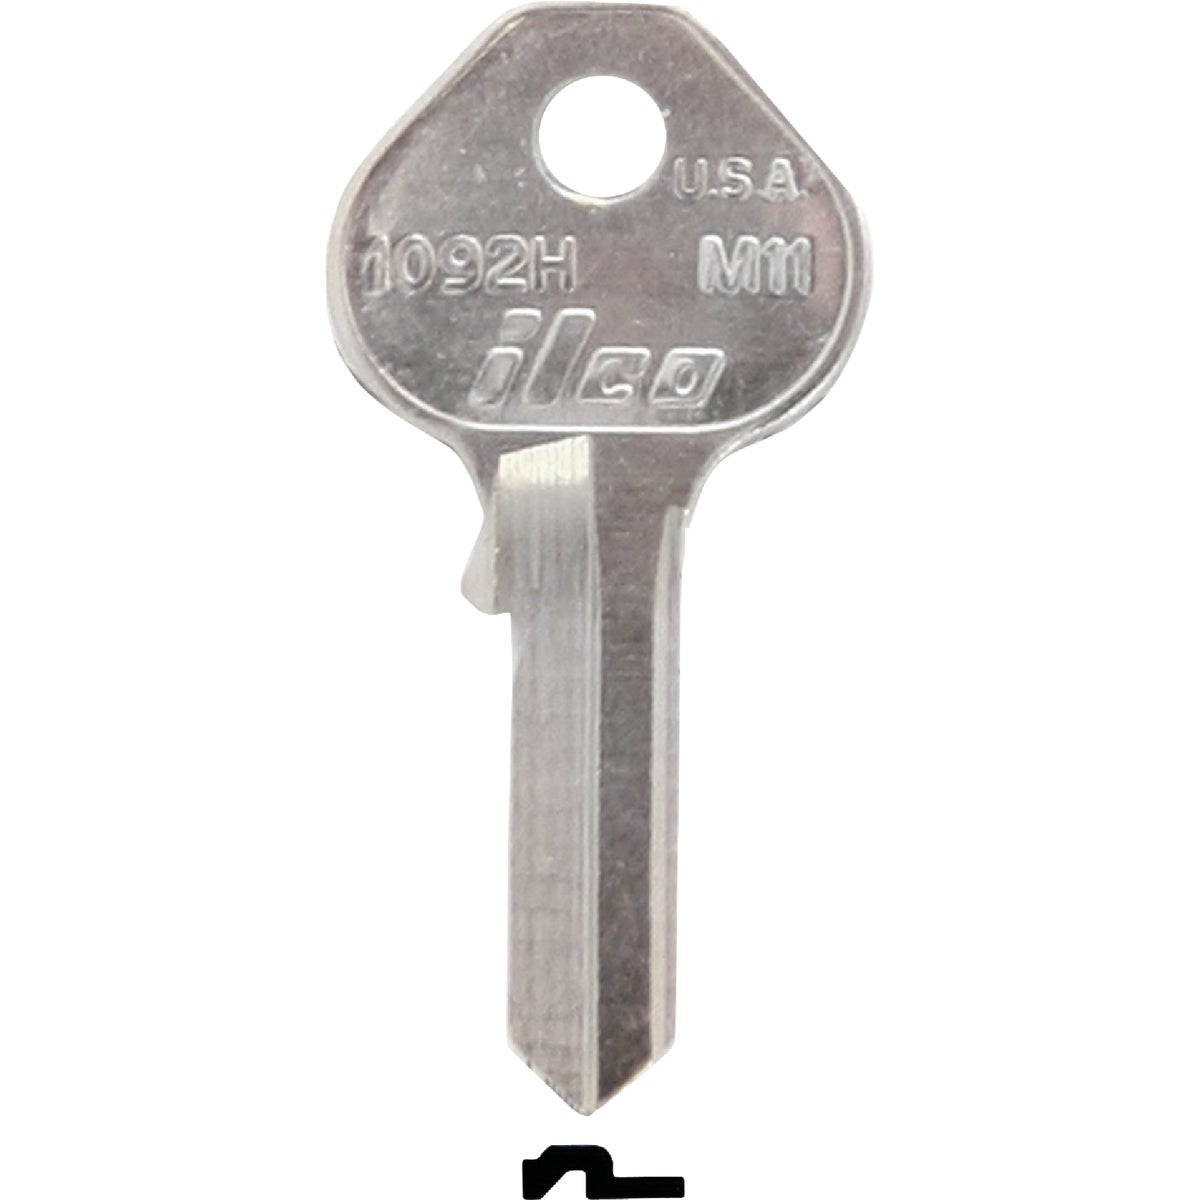 ILCO Master Nickel Plated Padlock Key M11 / 1092H (10-Pack)